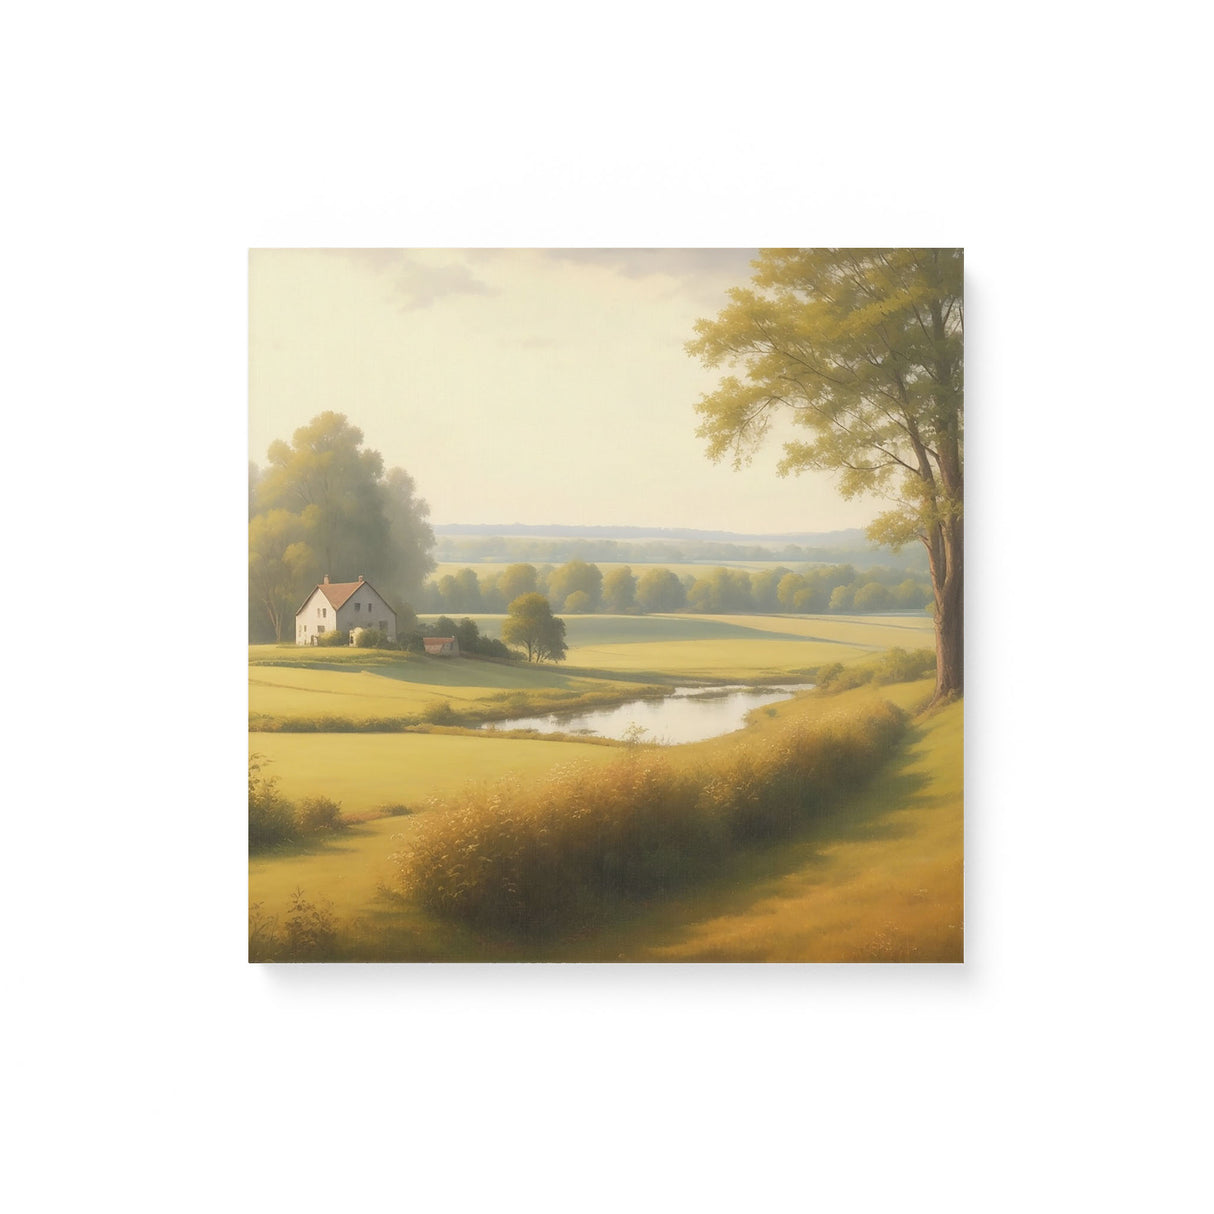 Lush Scenic Landscape Wall Art Canvas {Dreamy Countryside} Canvas Wall Art Sckribbles 16x16  